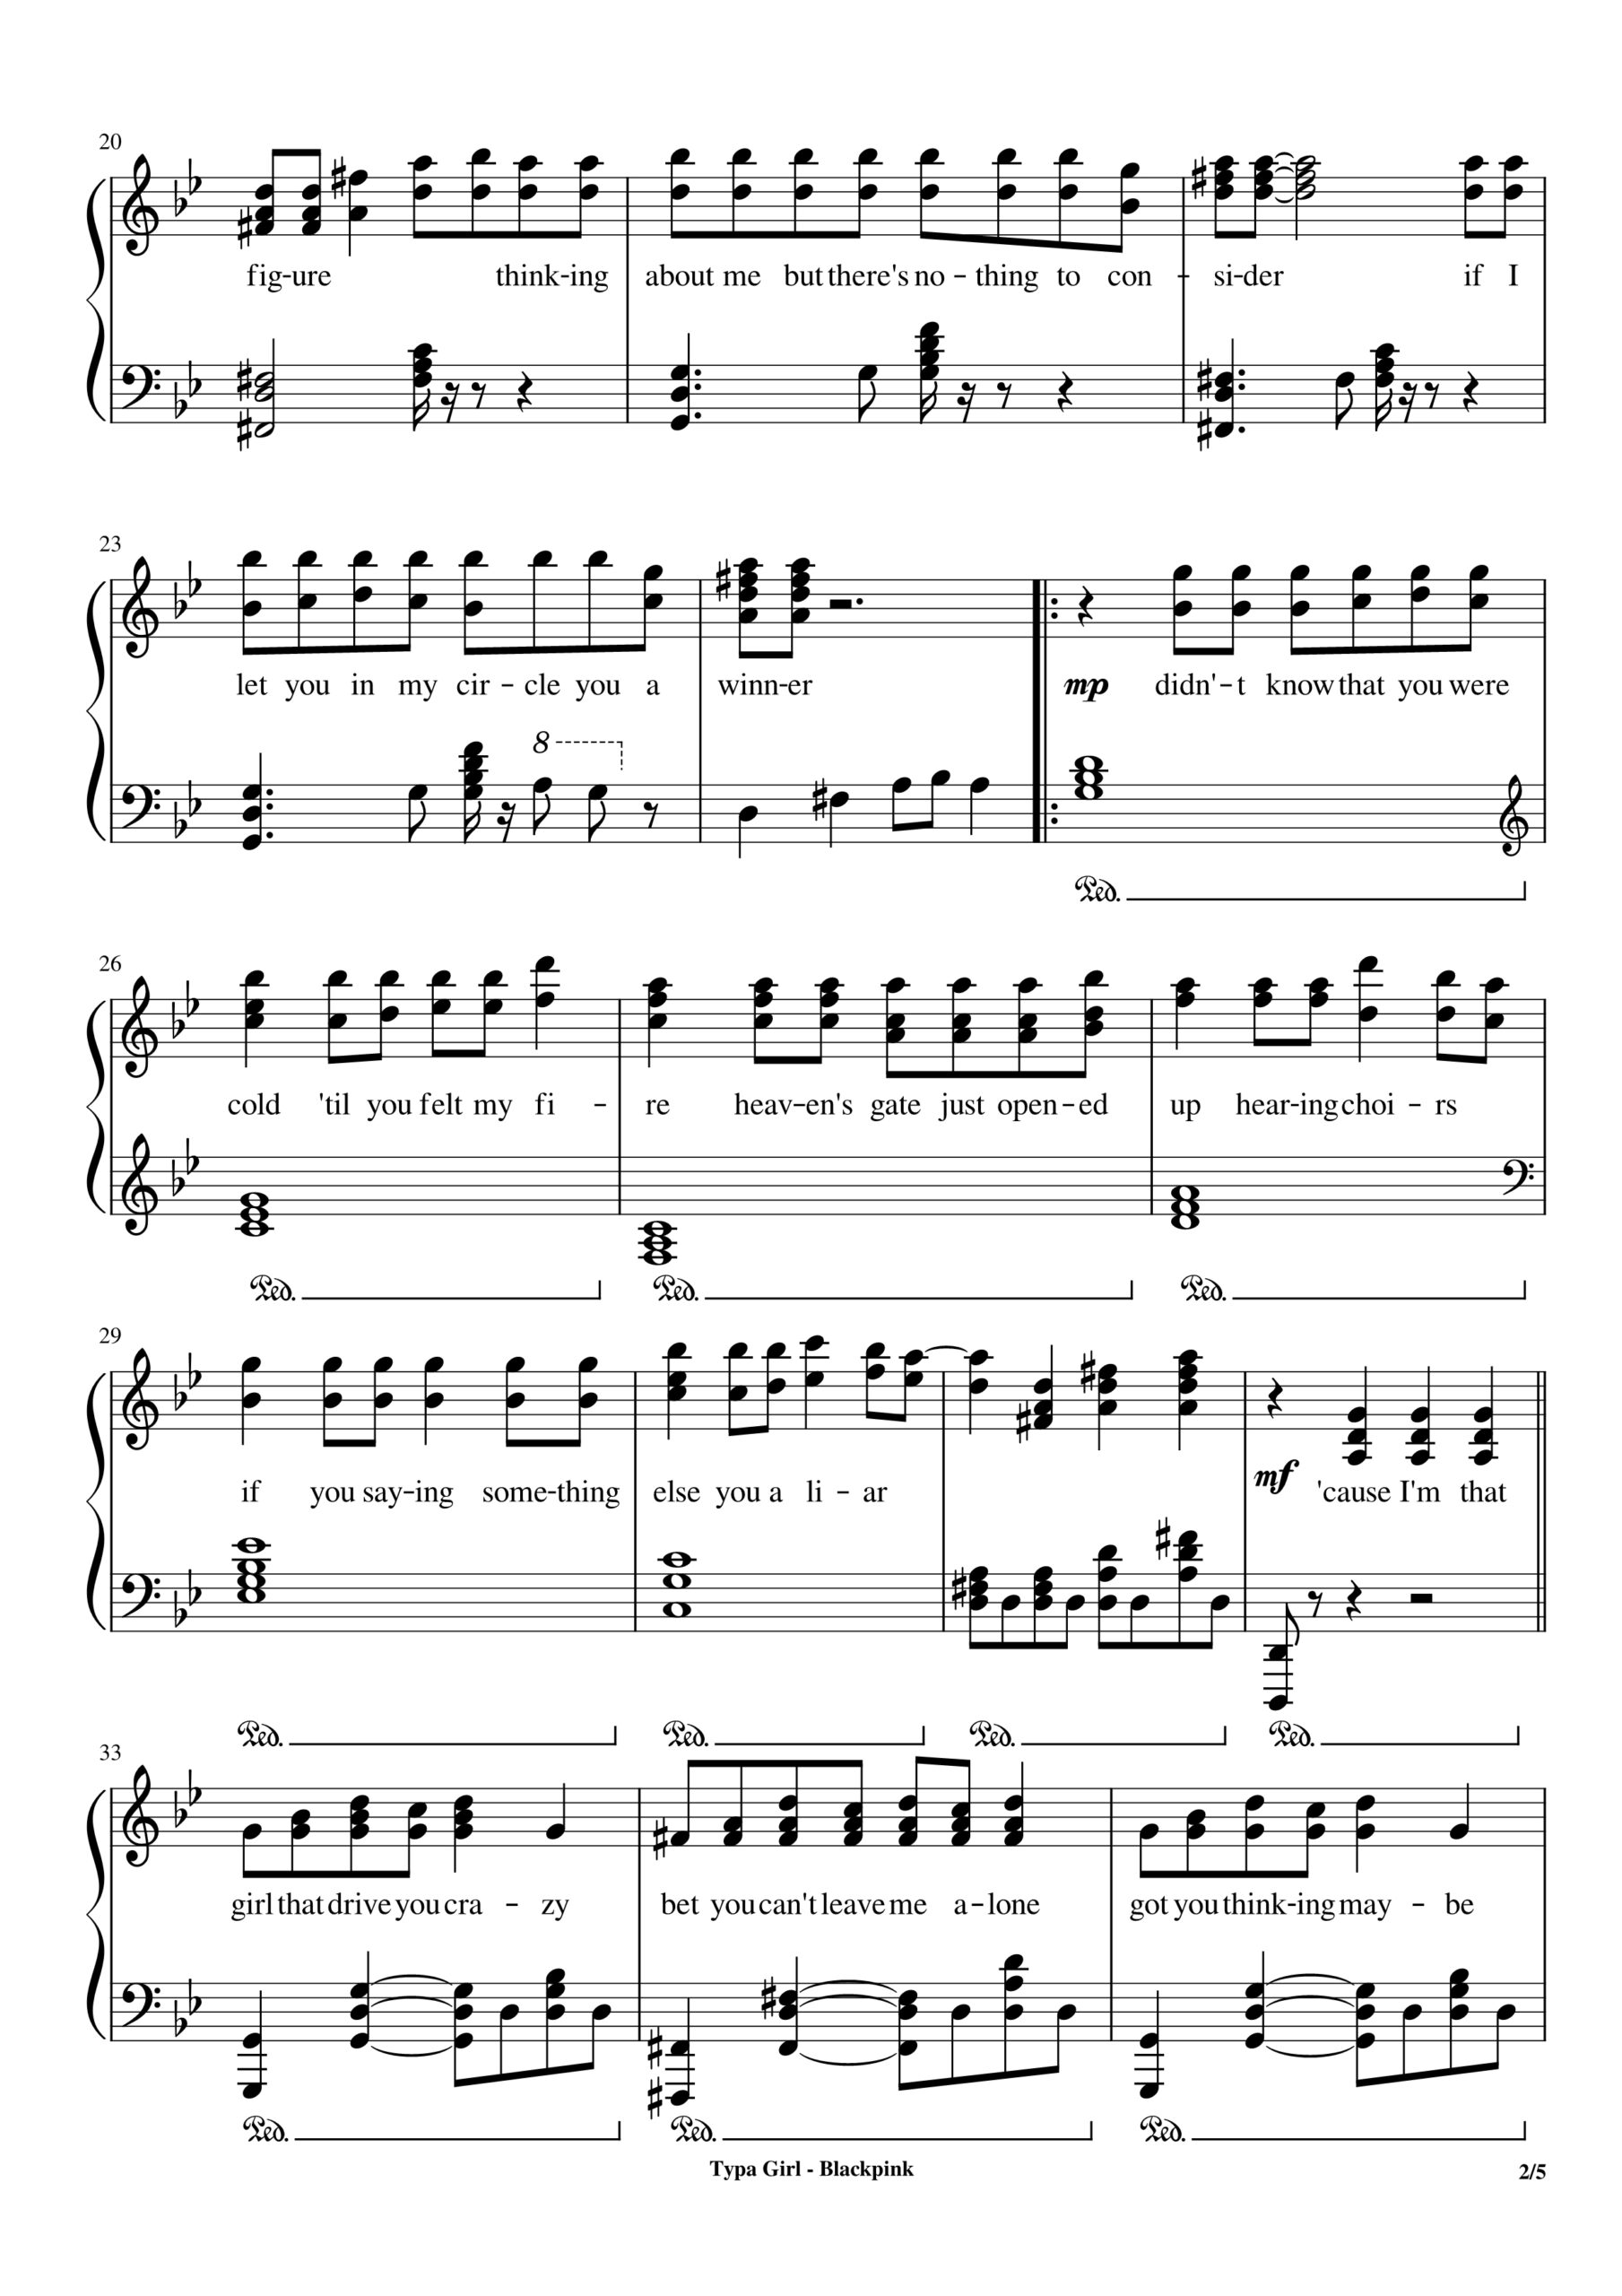 Blackpink, Typa Girl Piano Sheet Music Page 1